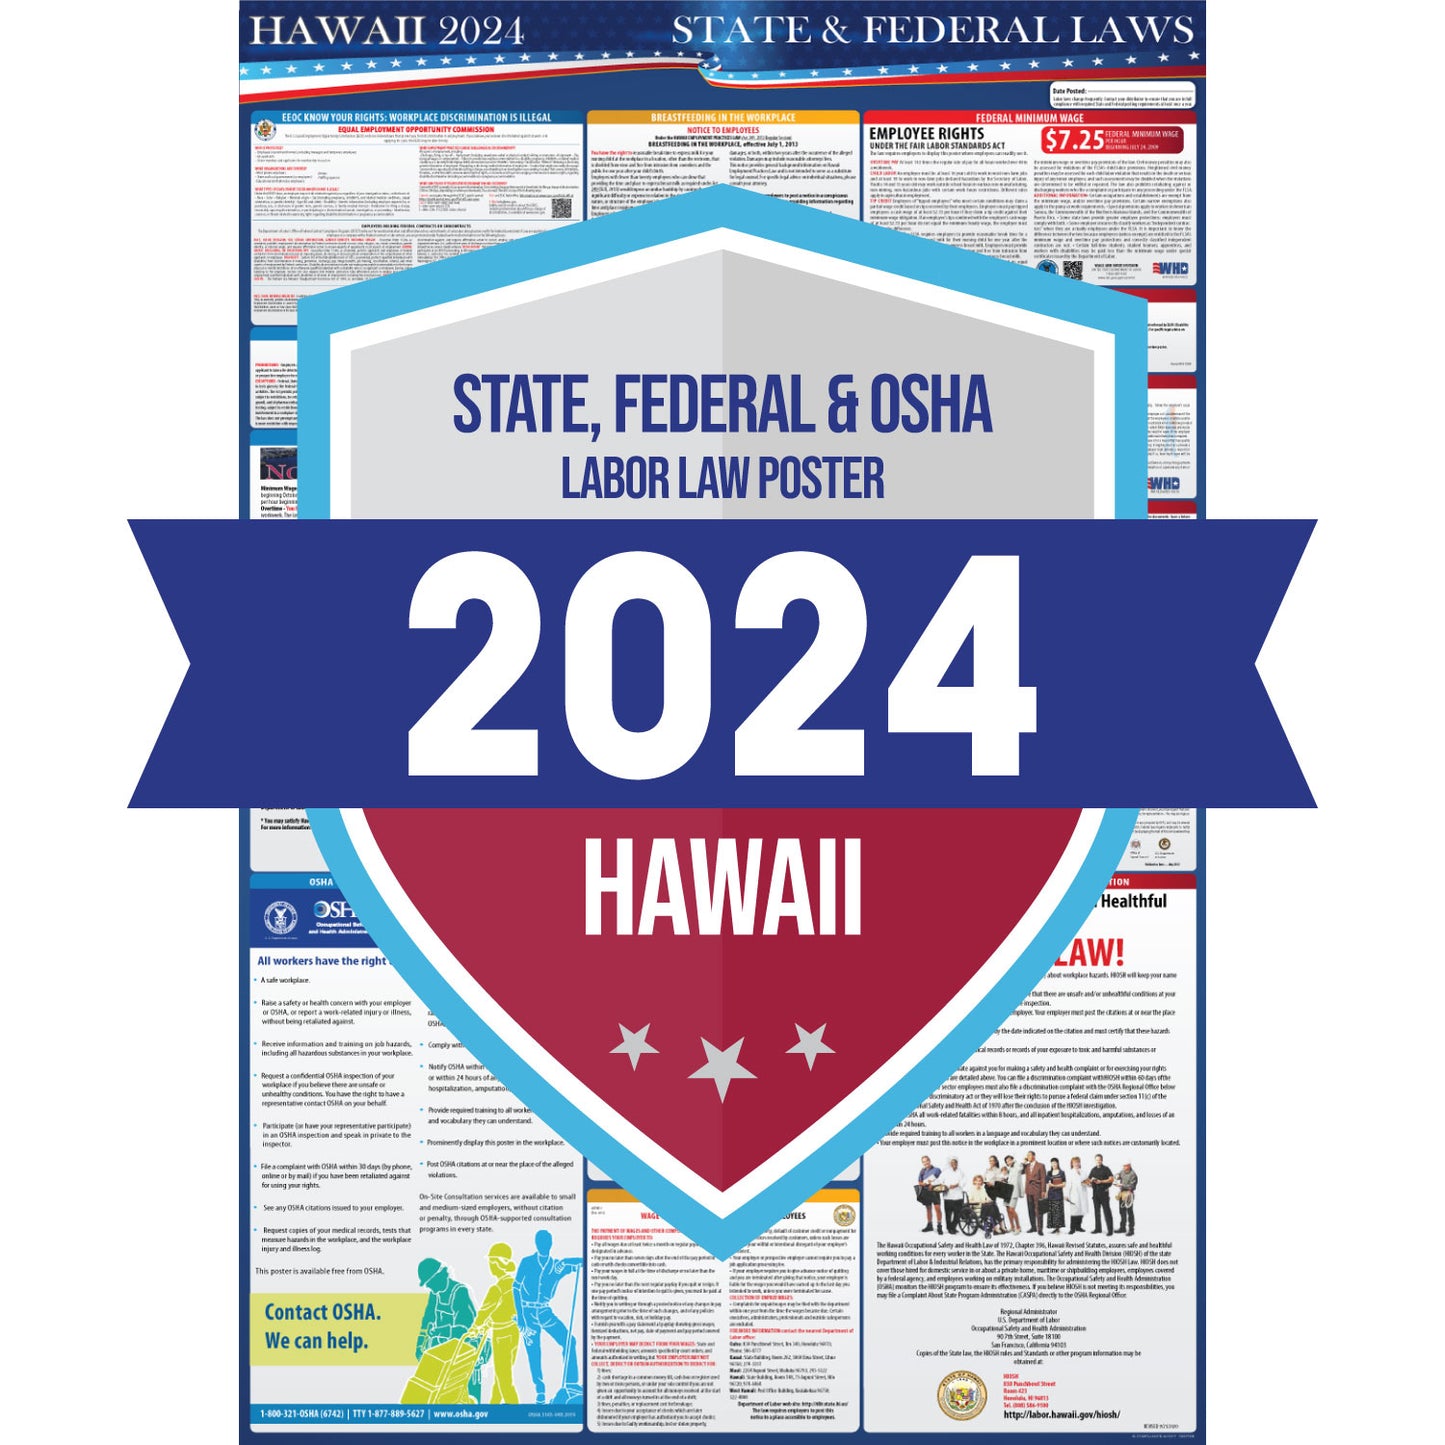 Hawaii 2024 Labor Law Poster